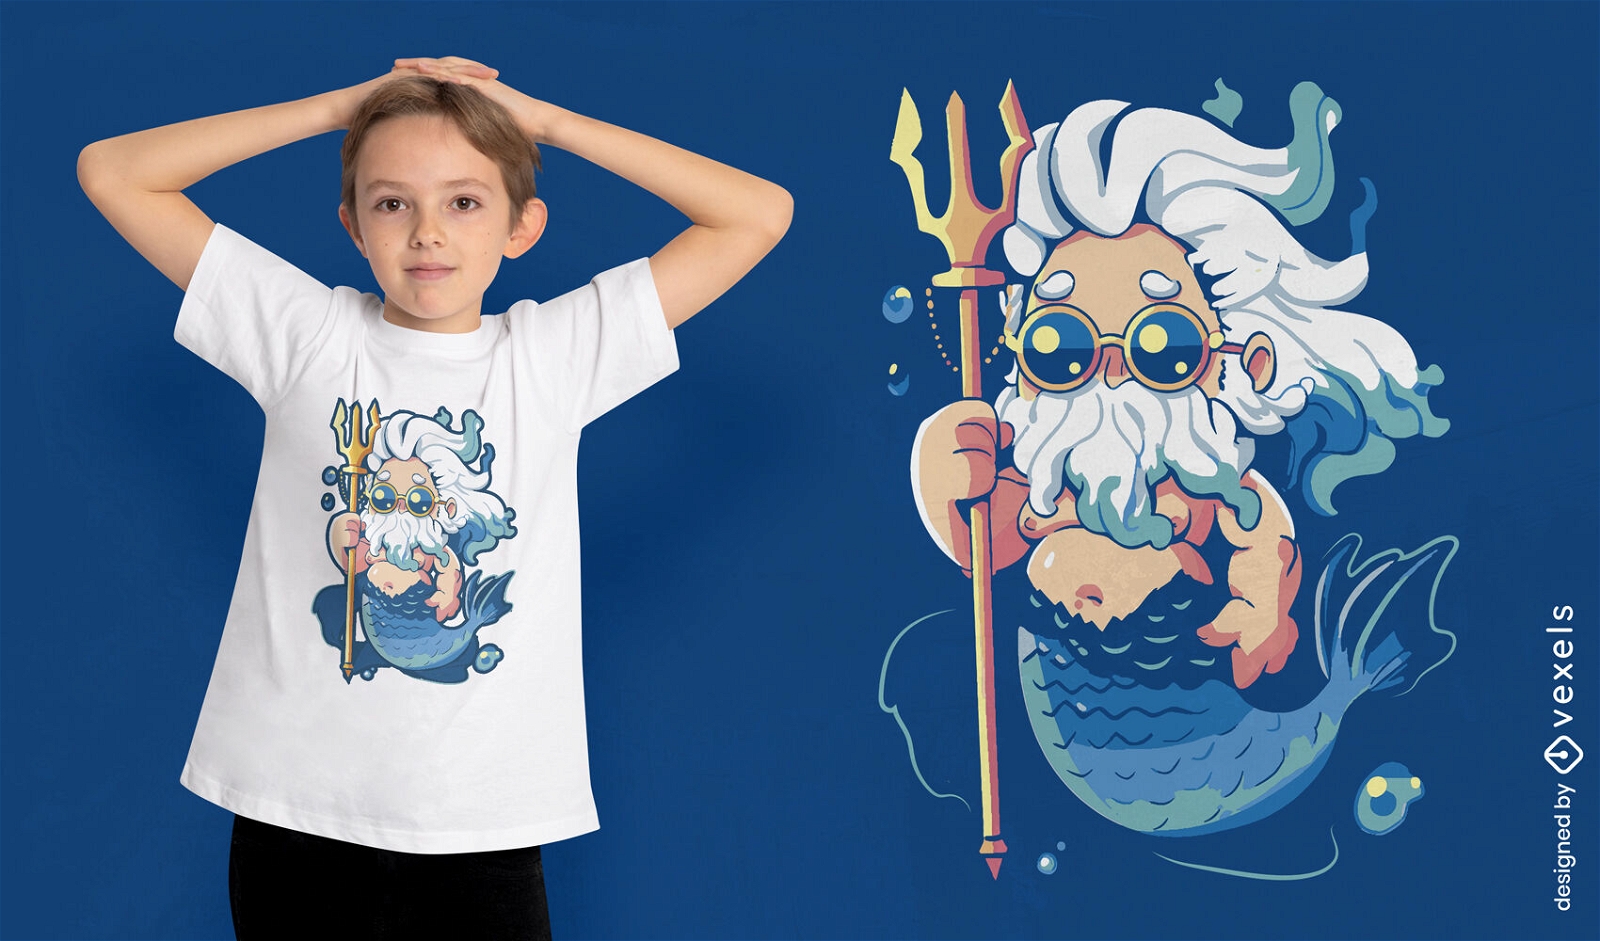 Male mermaid t-shirt design